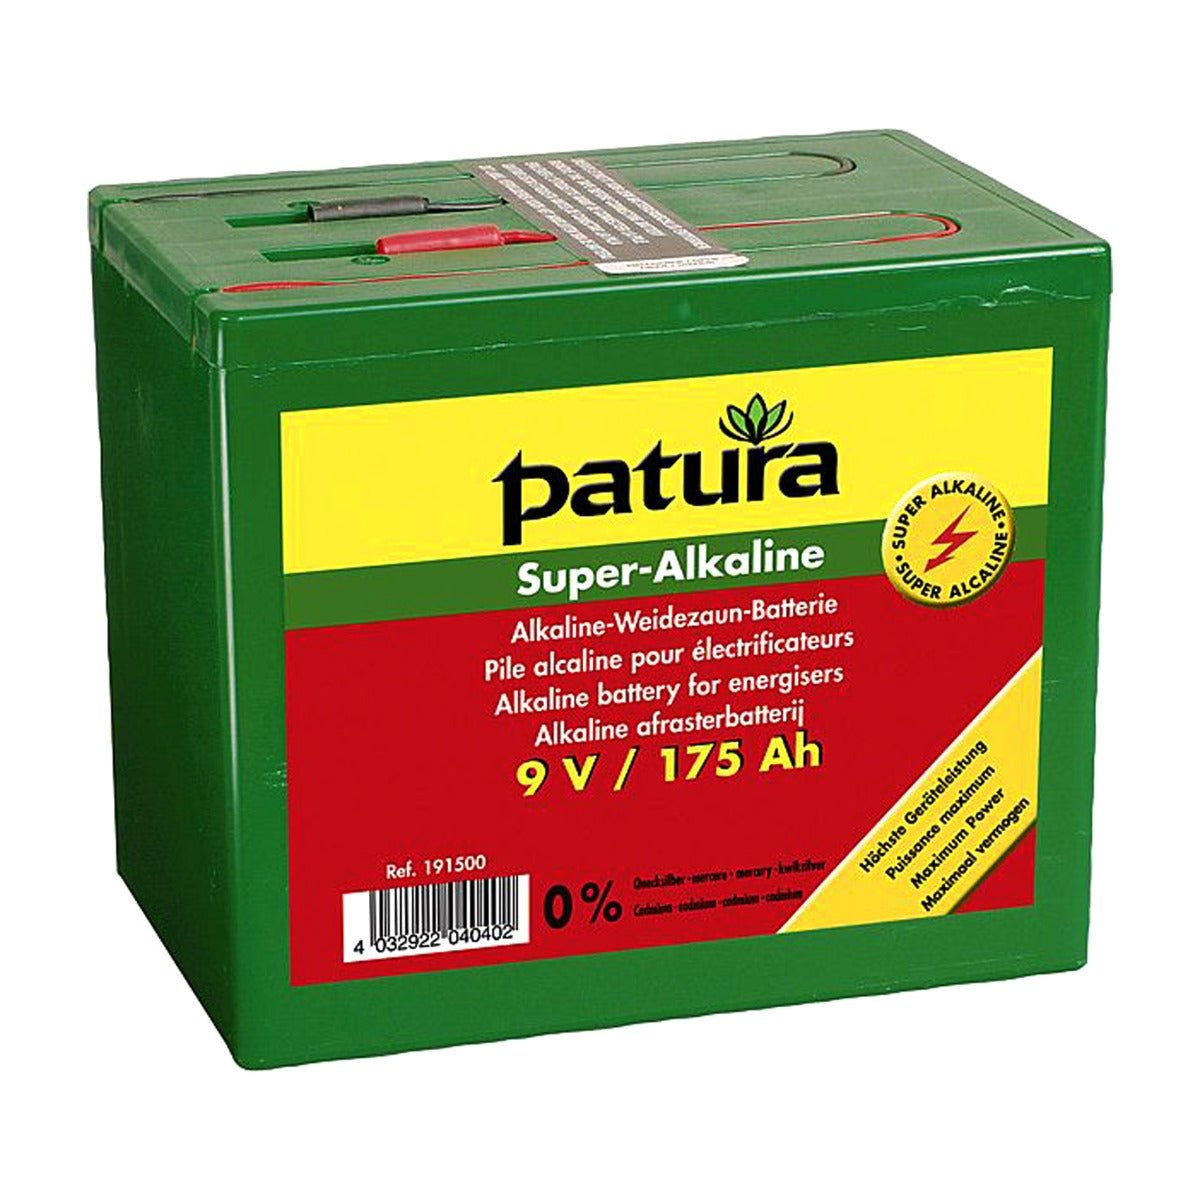 Patura Super-Alkaline Weidezaun-Batterie 9 V